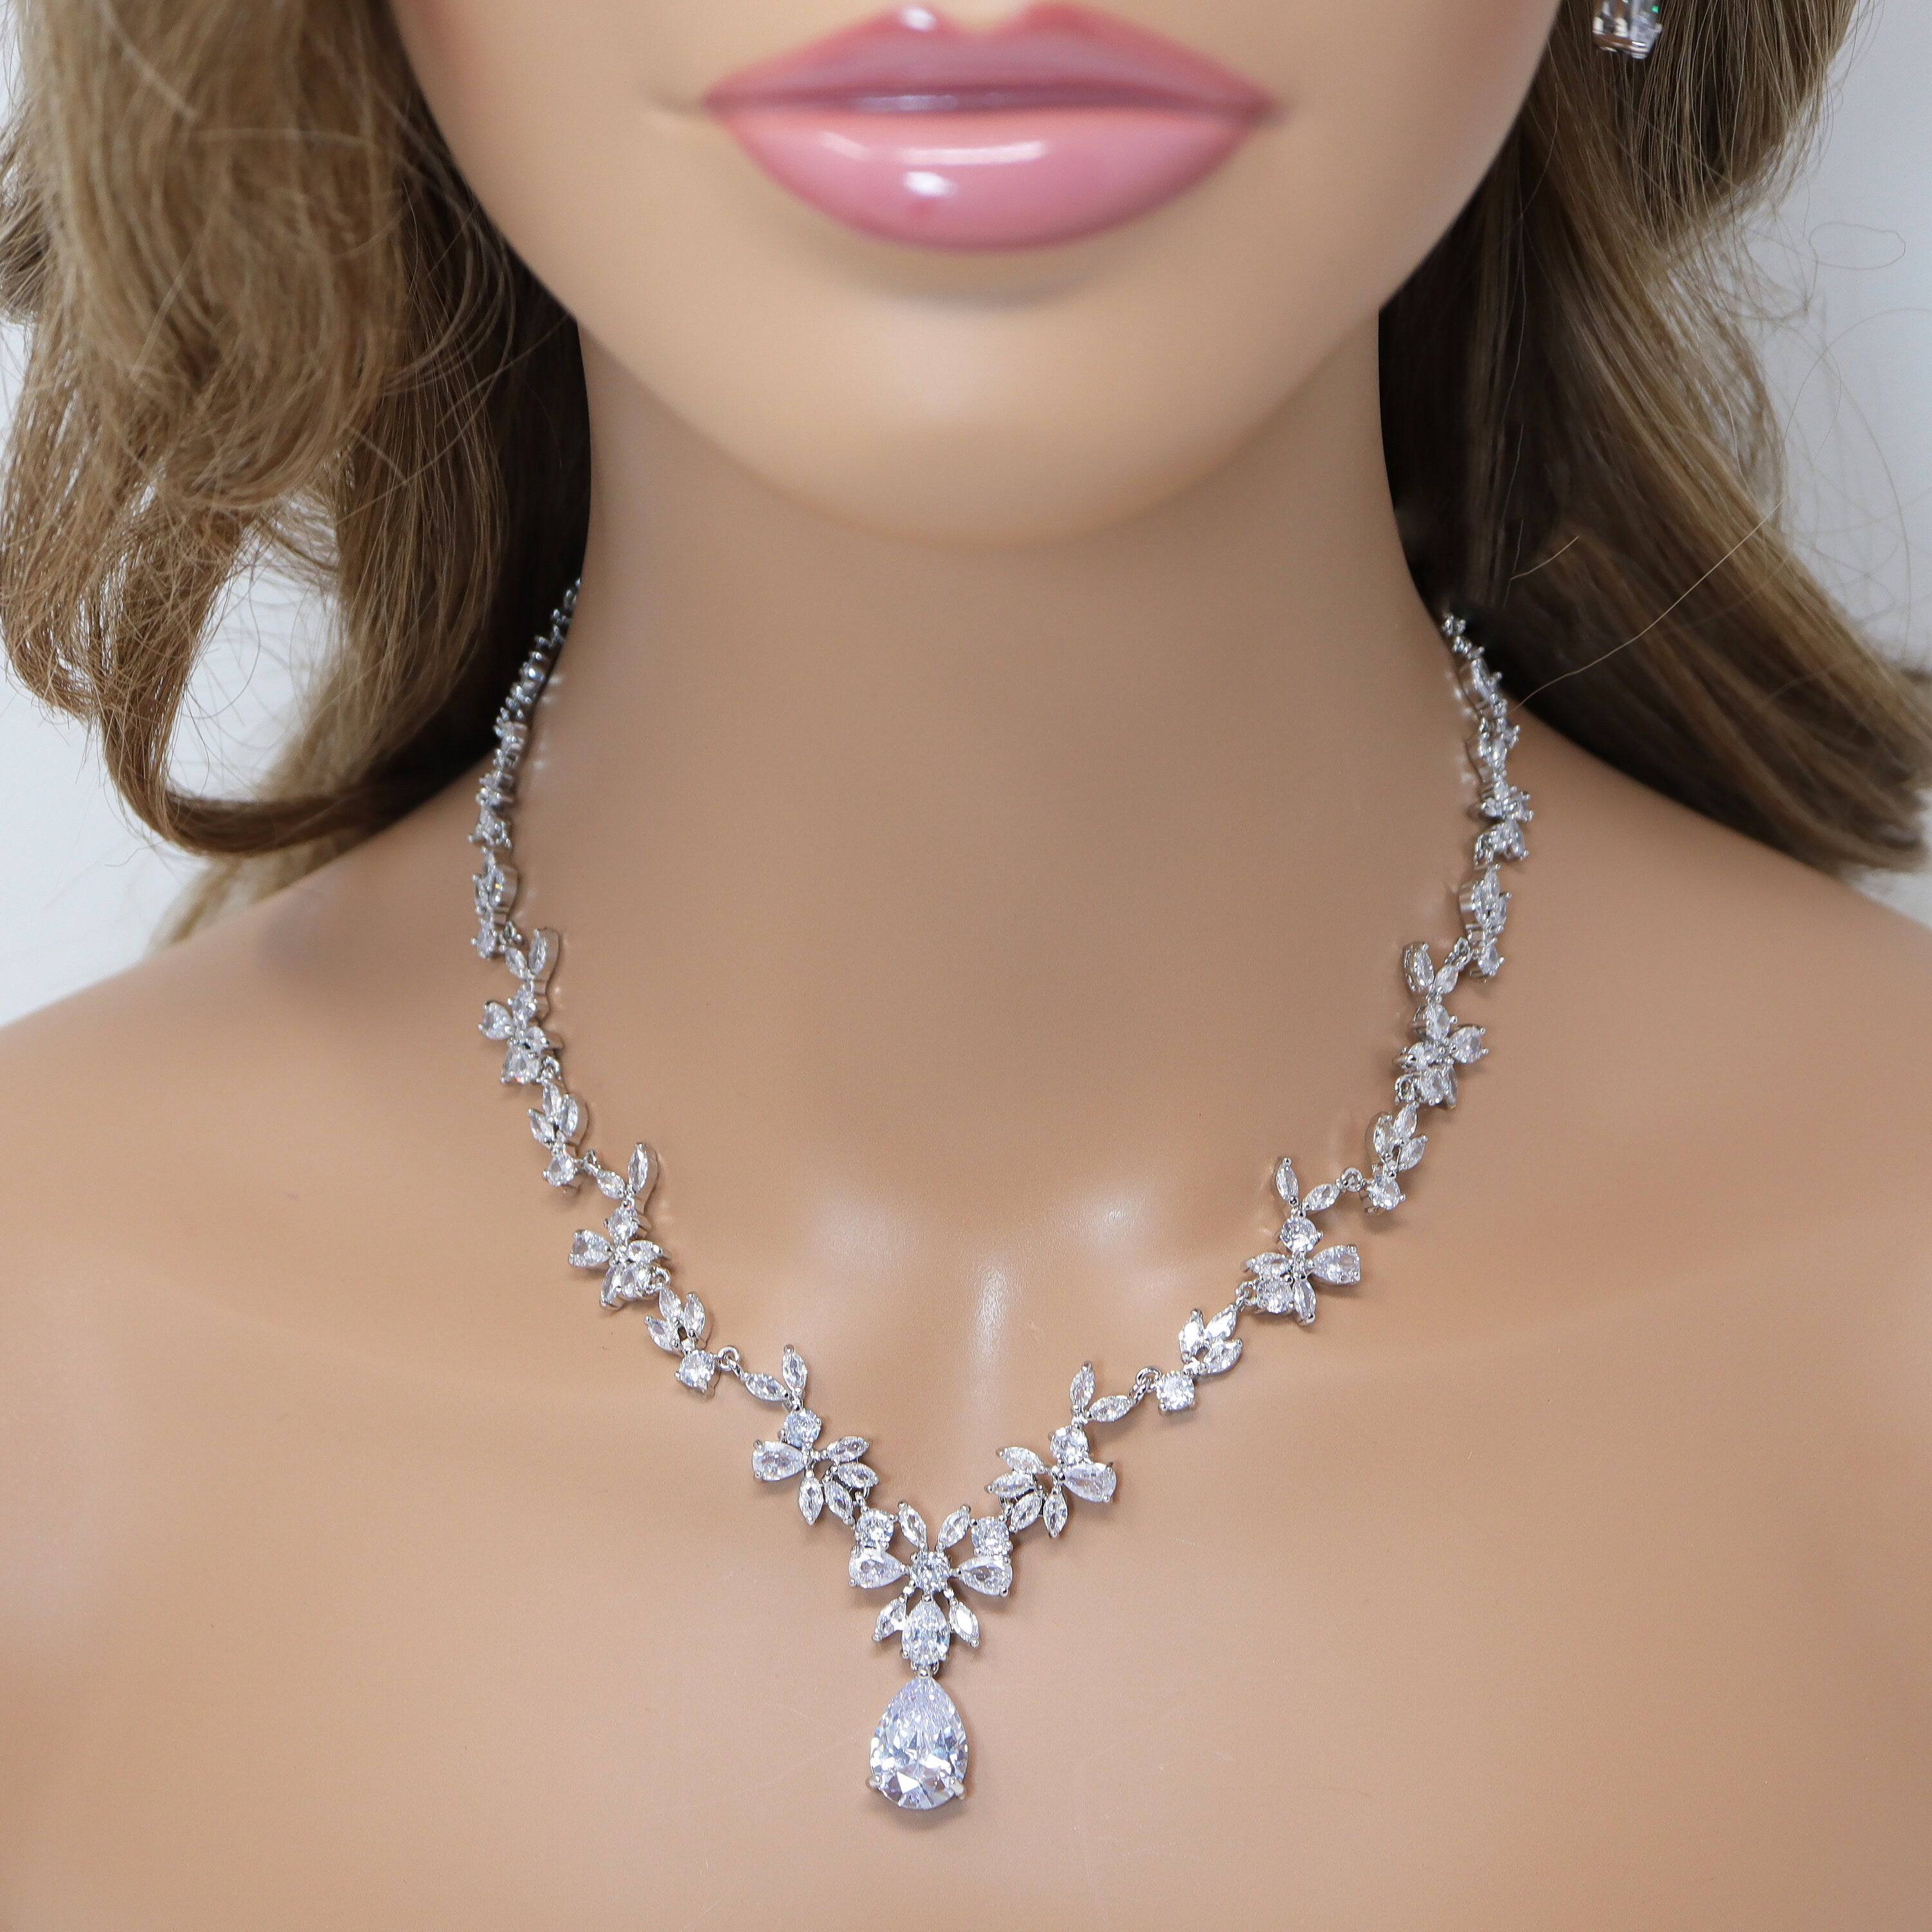 Swarovski Crystal Floral Leaves Diamond/Crystal Necklace, Bridal Neckl –  TheMillenniumBride